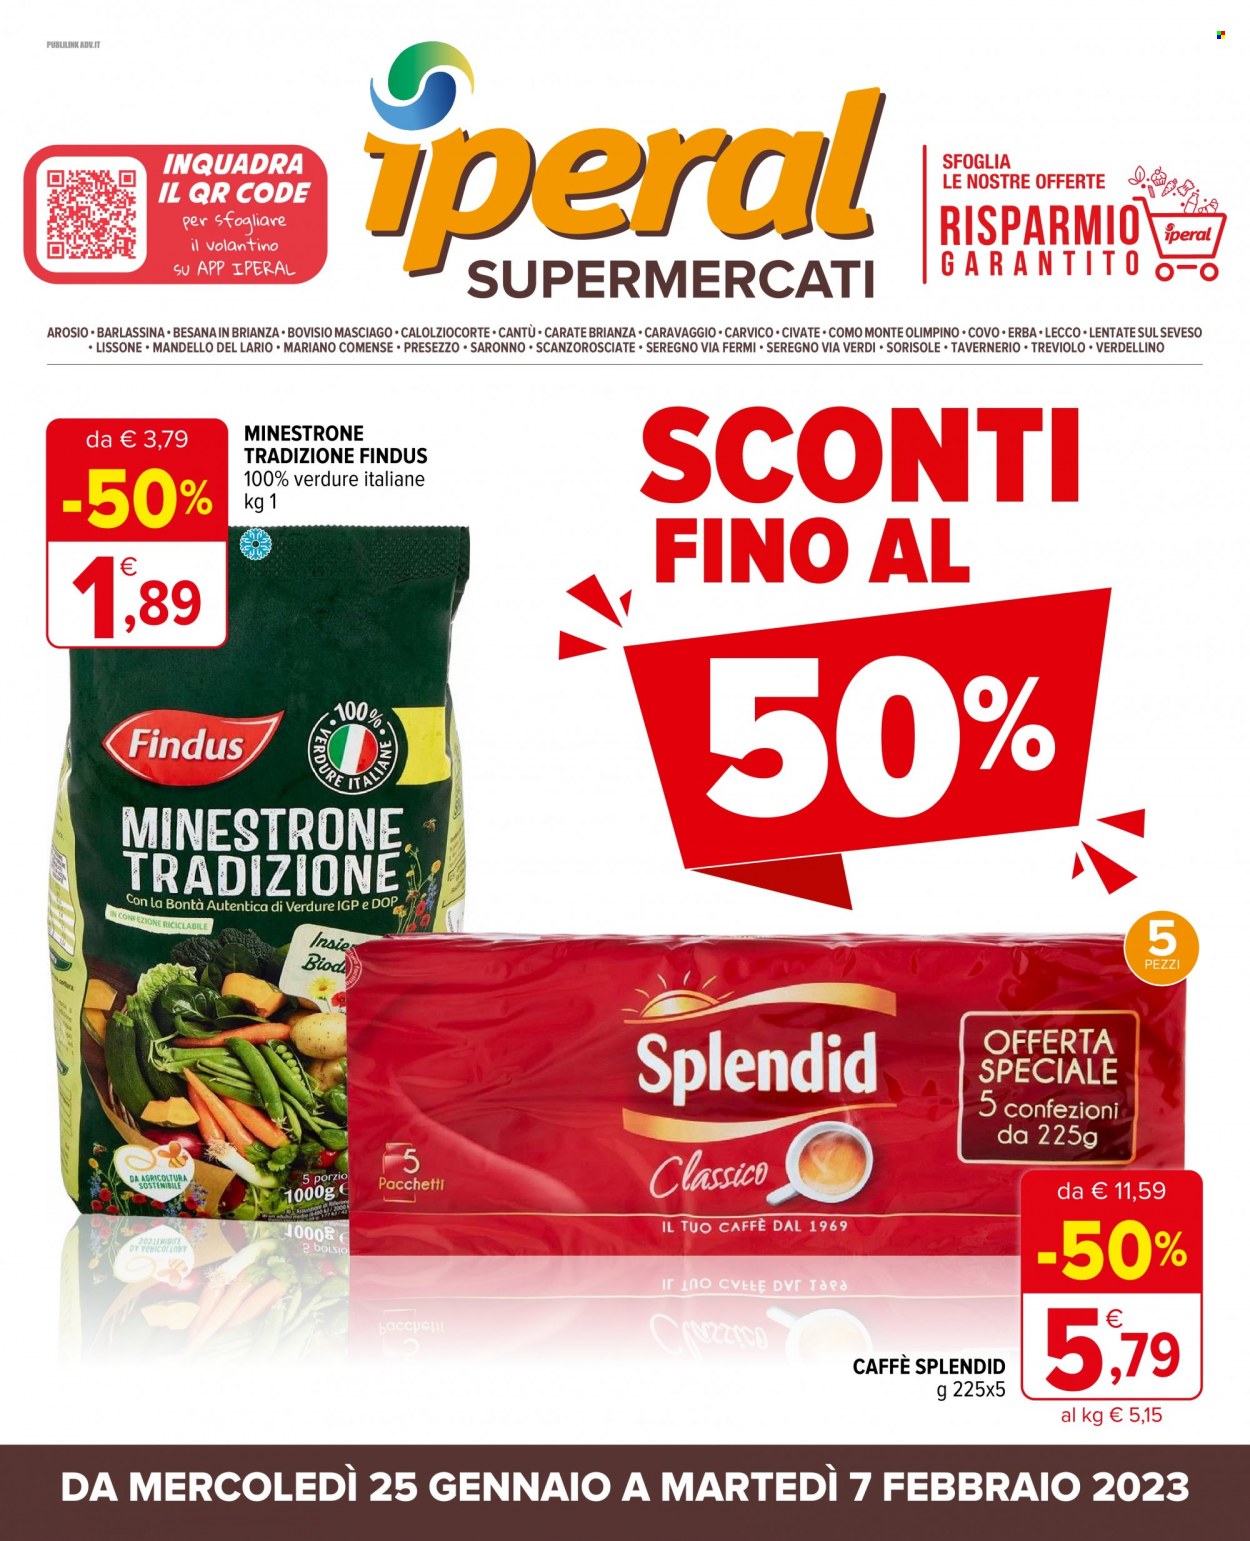 thumbnail - Volantino Iperal - 25/1/2023 - 7/2/2023 - Prodotti in offerta - Findus, minestrone, caffè, Splendid. Pagina 1.